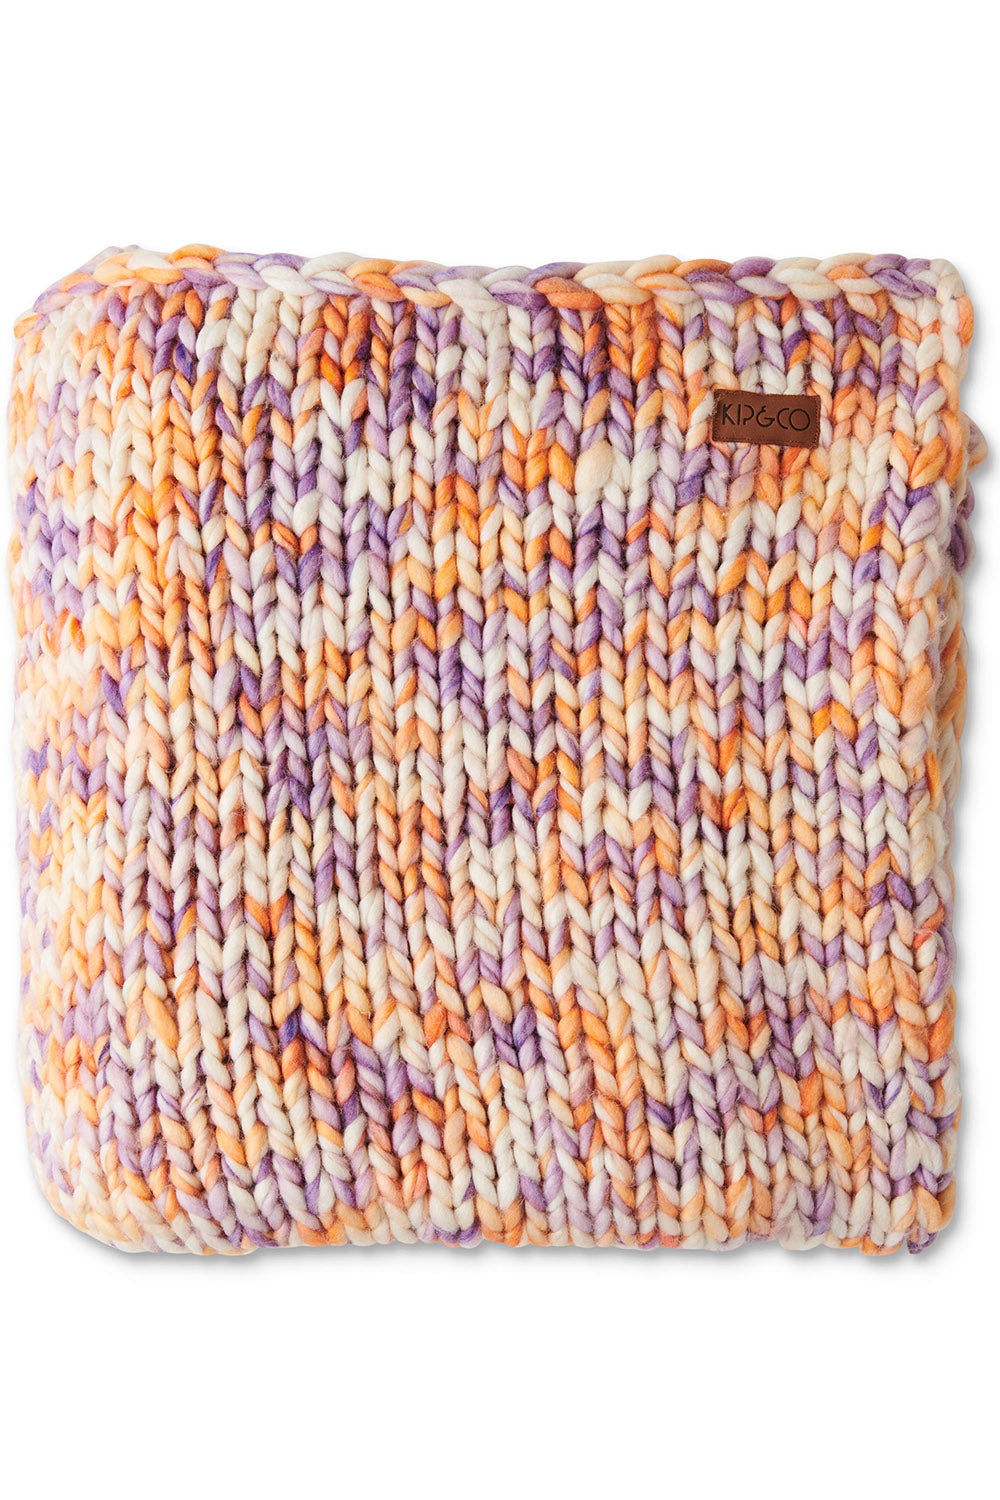 KIP & CO | Boysenberry Pie Chunky Knit Blanket One Size